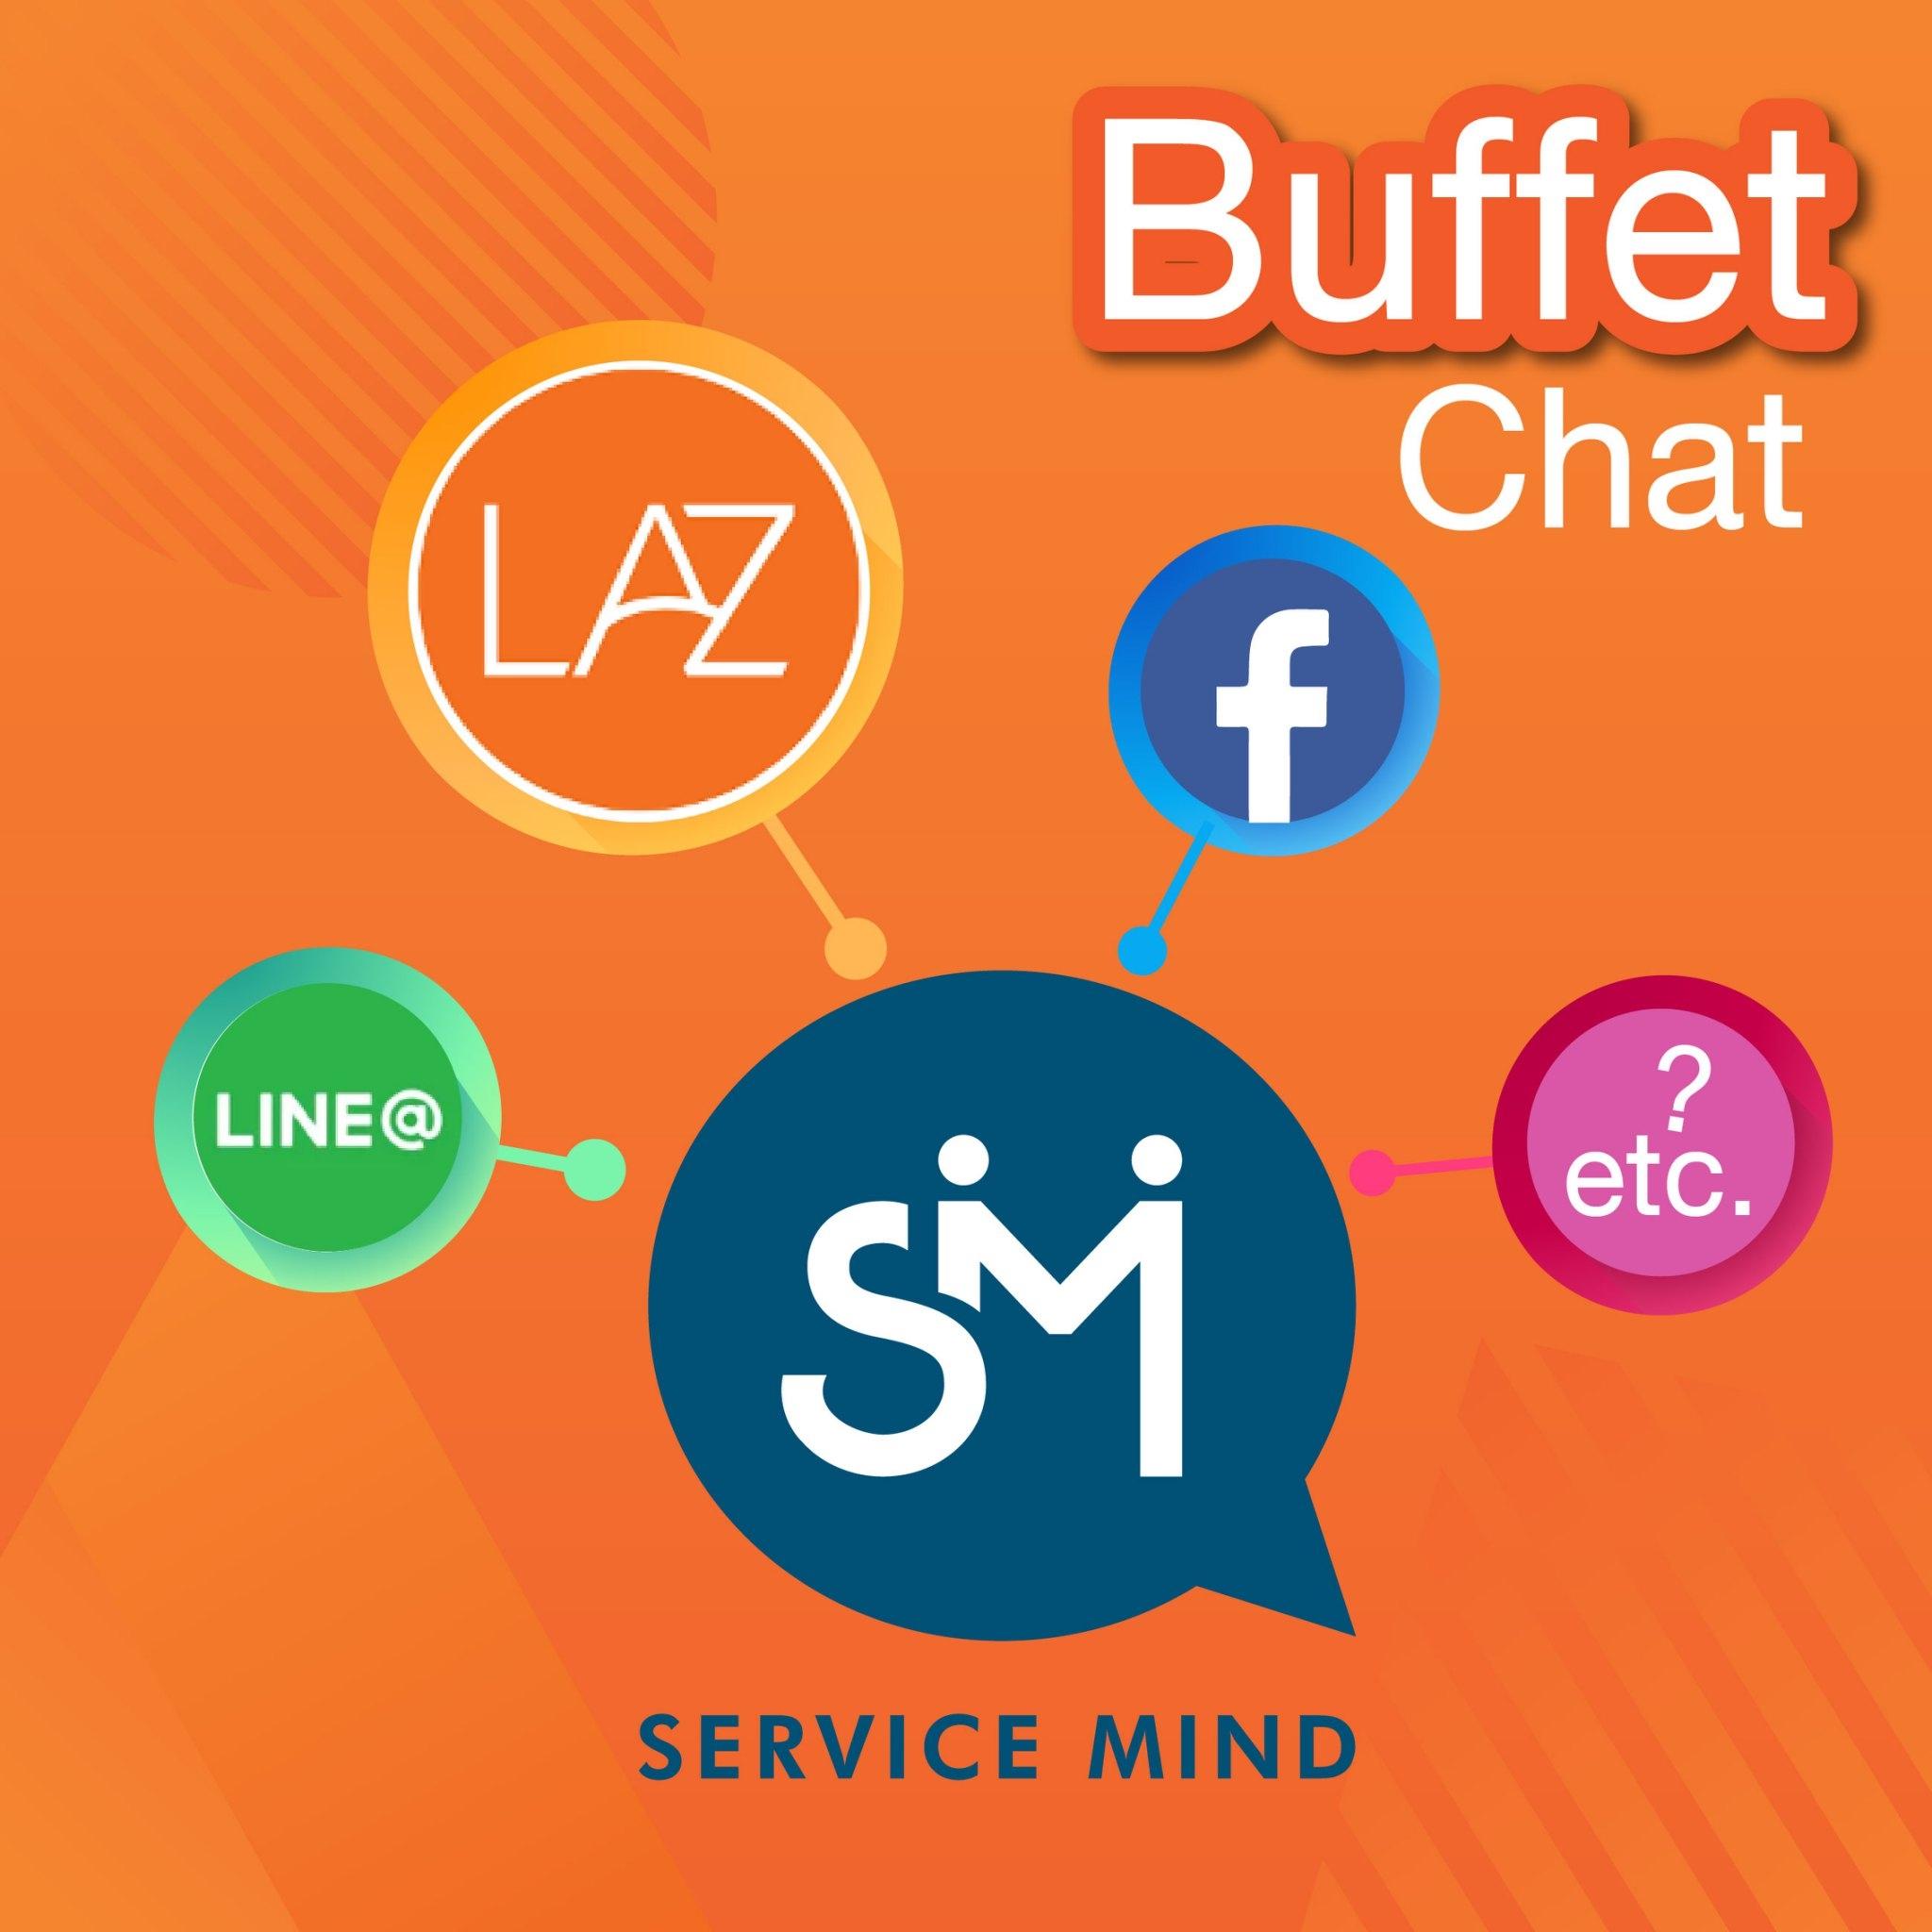 Buffet chatting service (Social) 3 ช่องทาง แต่ละช่องไม่เกิน 250 แชท